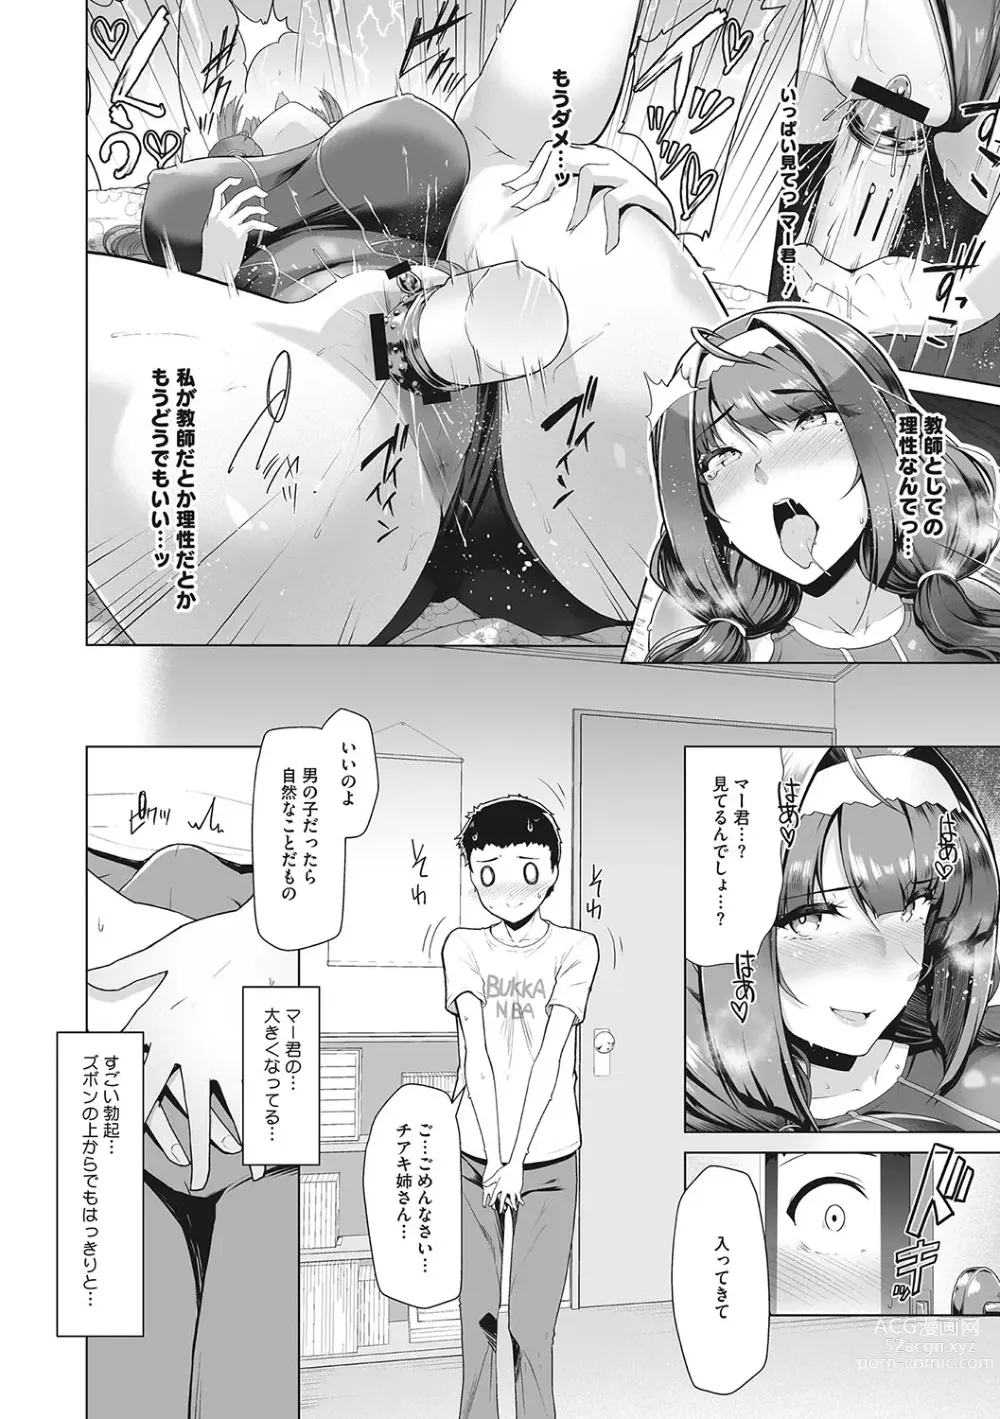 Page 15 of manga Kyouei Frustration